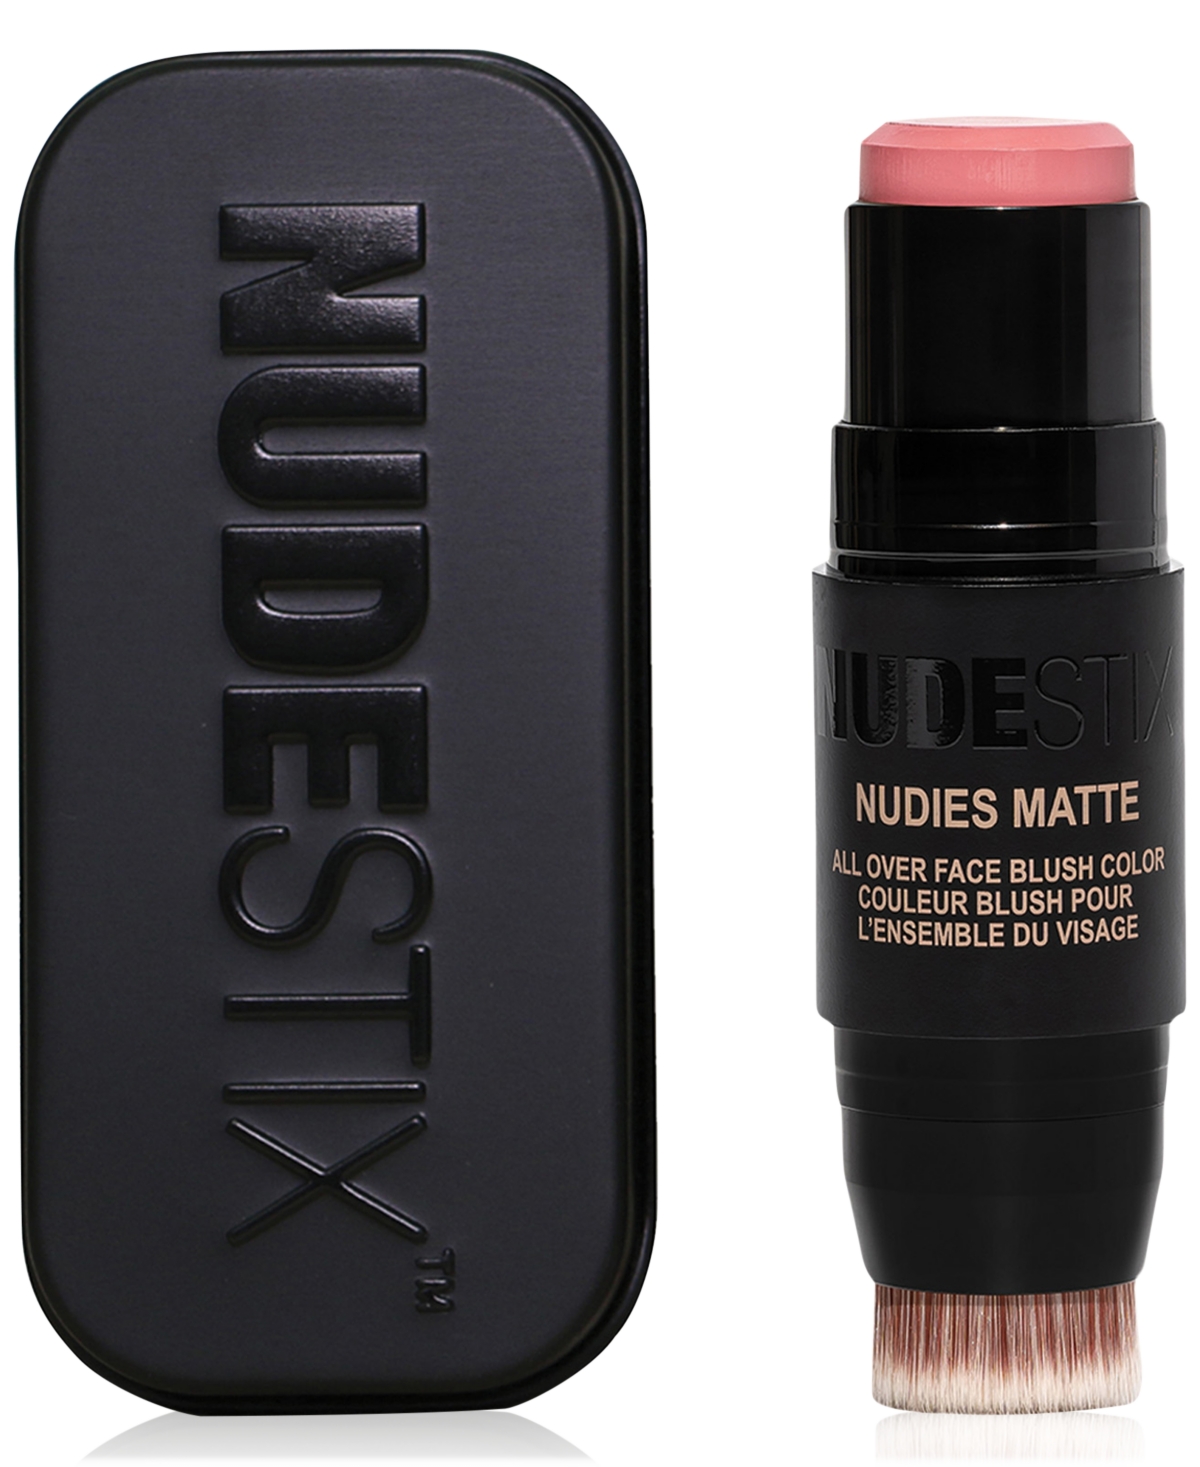 Nudestix Nudies Matte Blush In Sunkissed Pink (cool,bright Rose-pink)